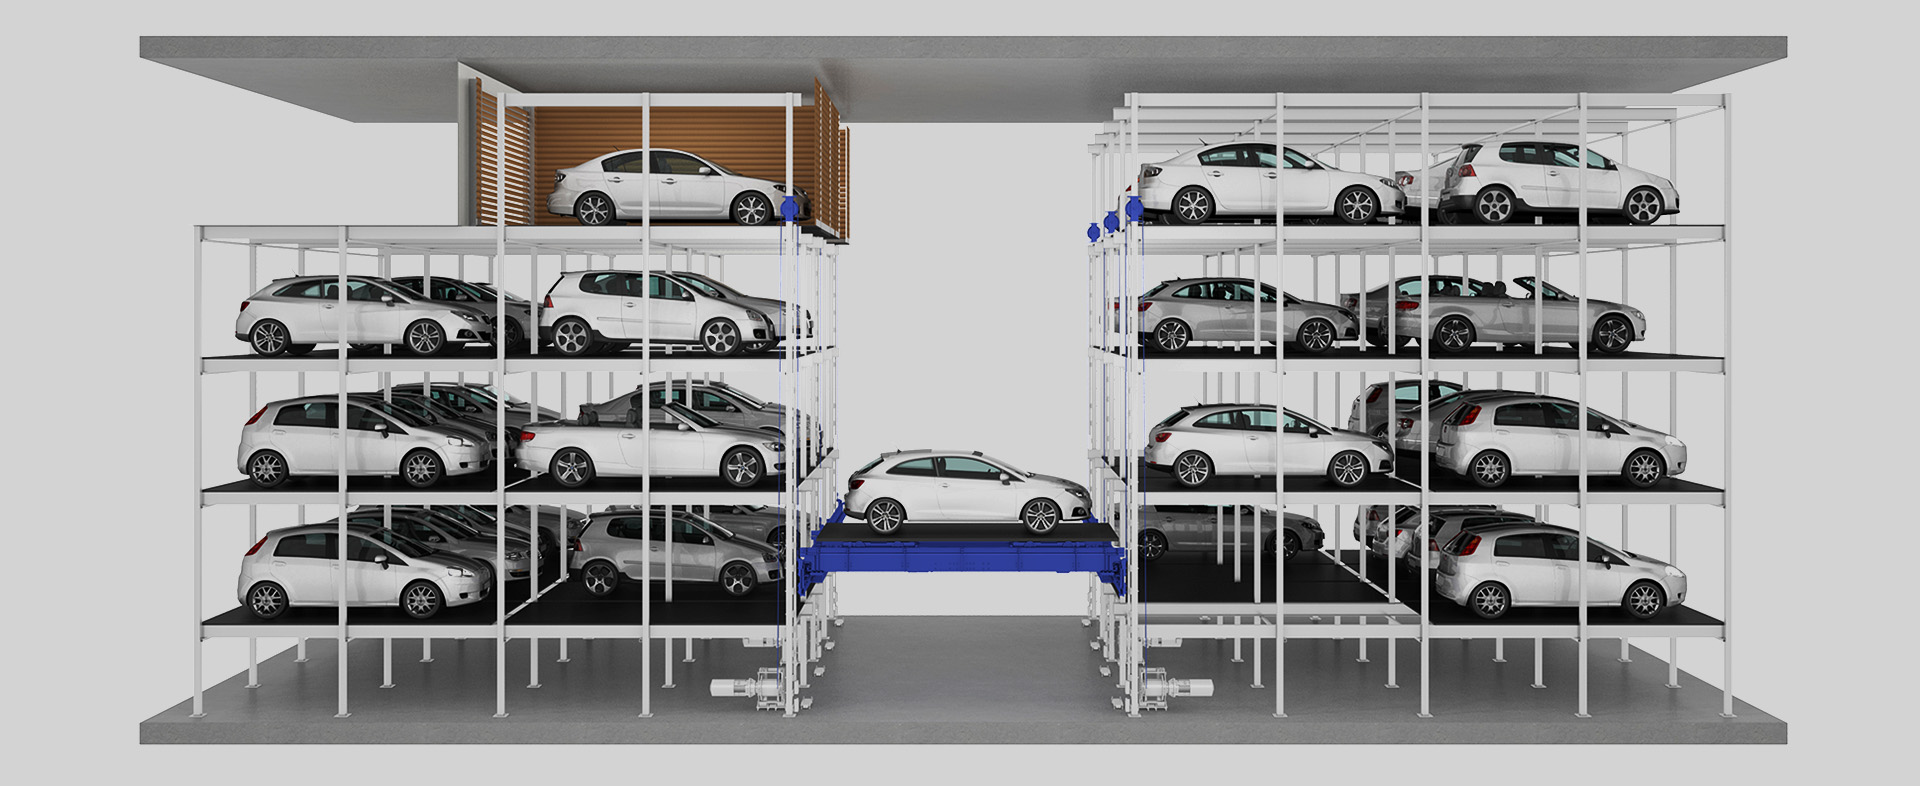 Car Parking Solution | Swiftbd